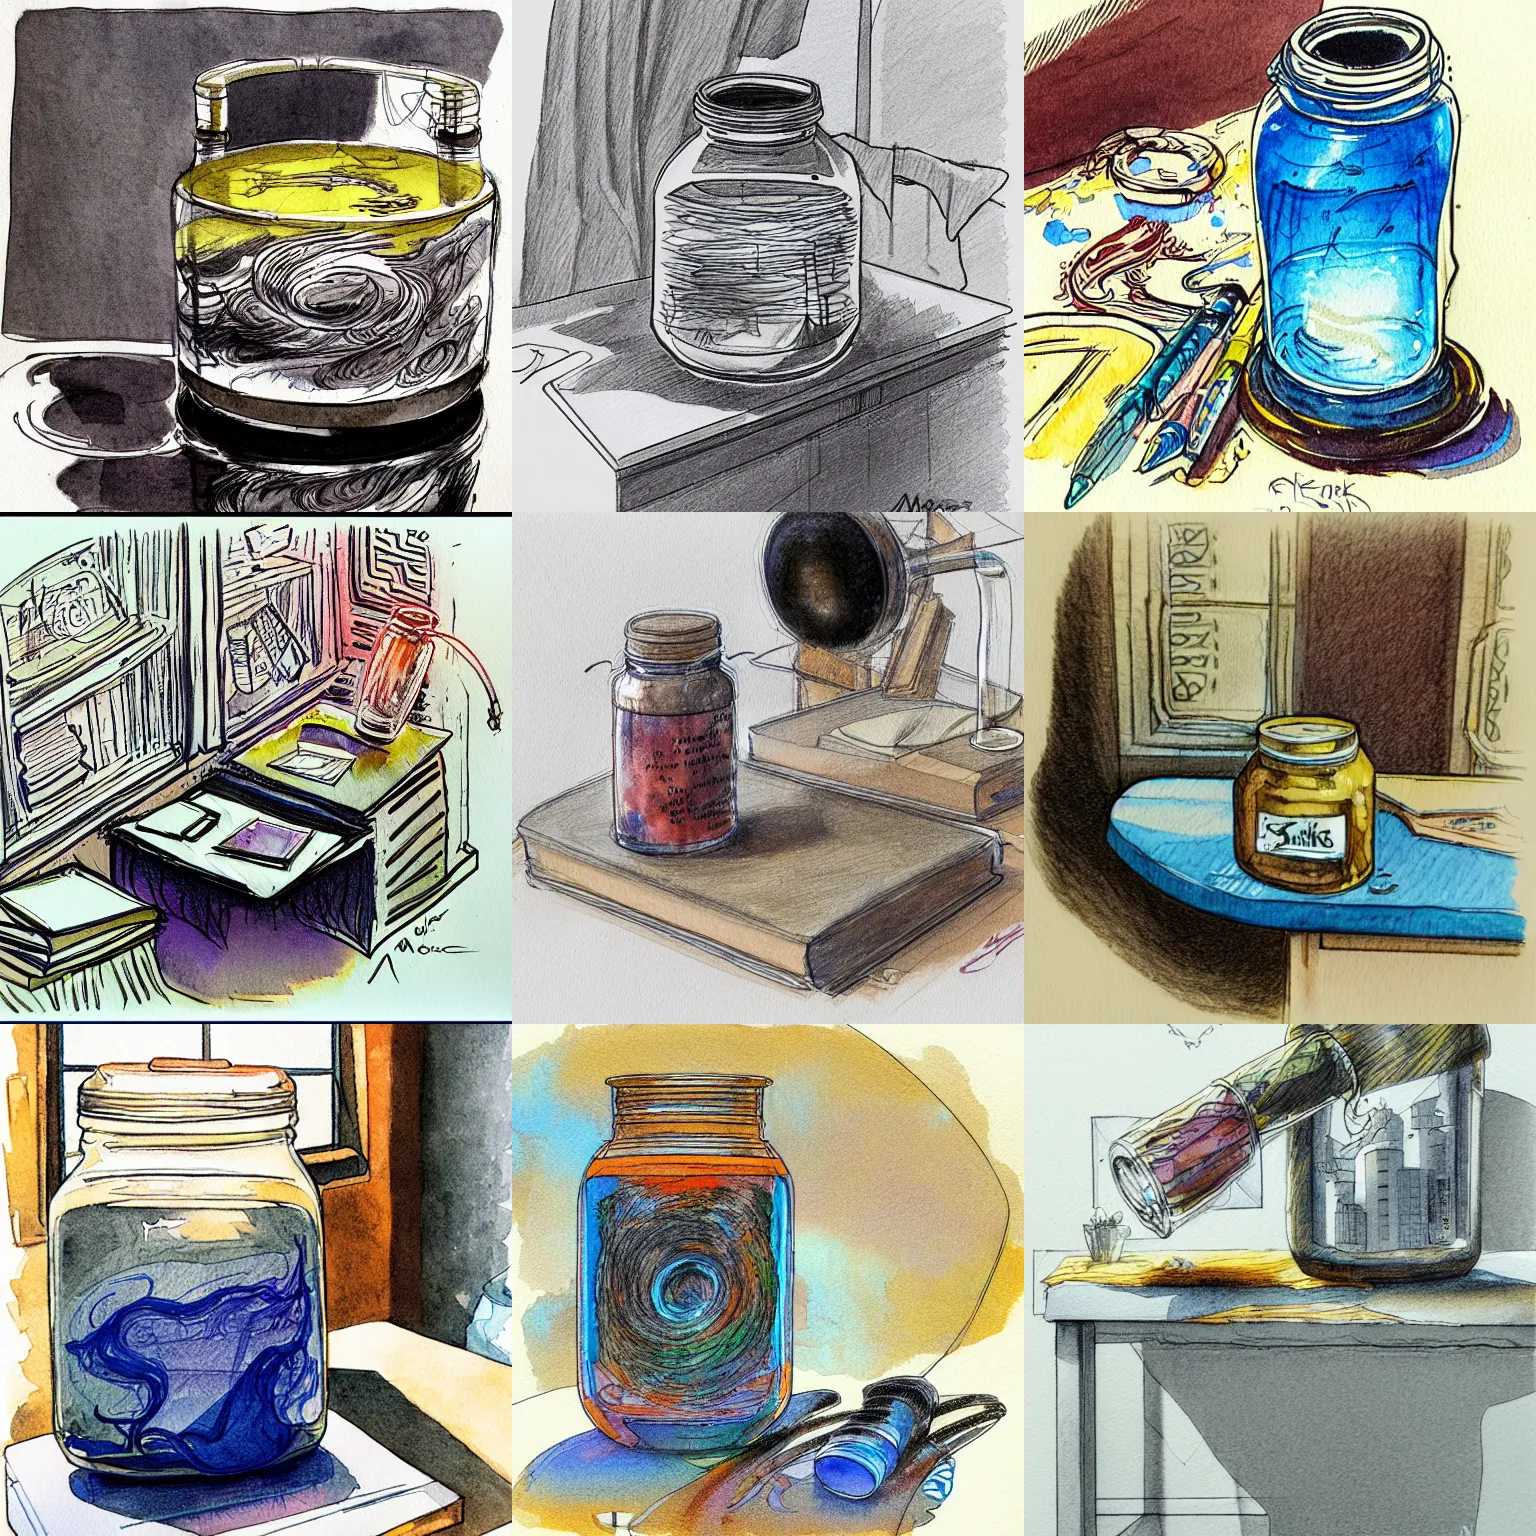 Prompt: sketch of jar of swirling ink on a desk, afternoon lighting, watercolor, heavy metal, by moebius